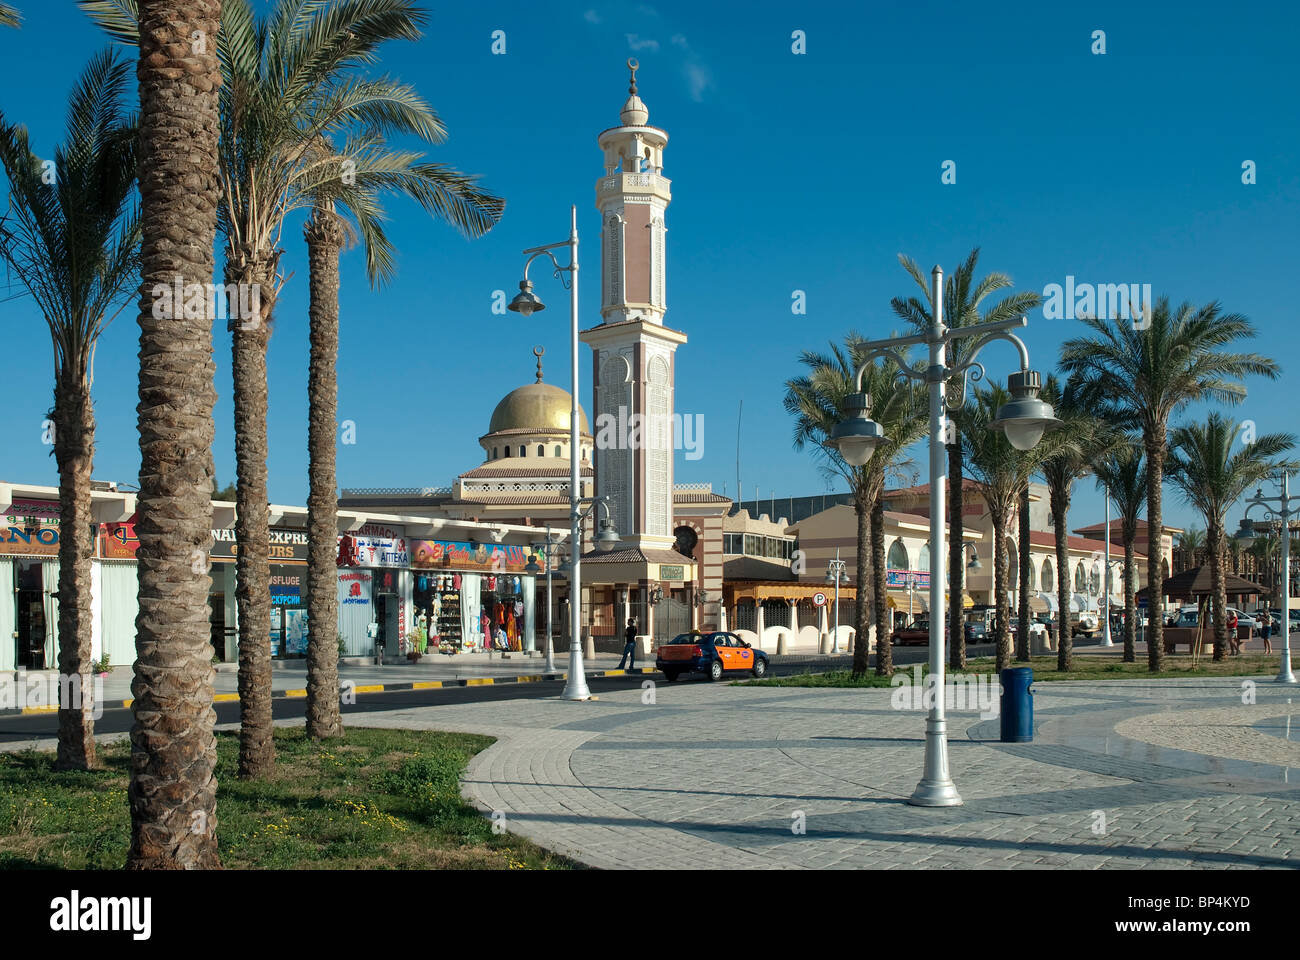 Mosque in Village Road tourist area, Hurghada, Red Sea, Egypt Stock Photo